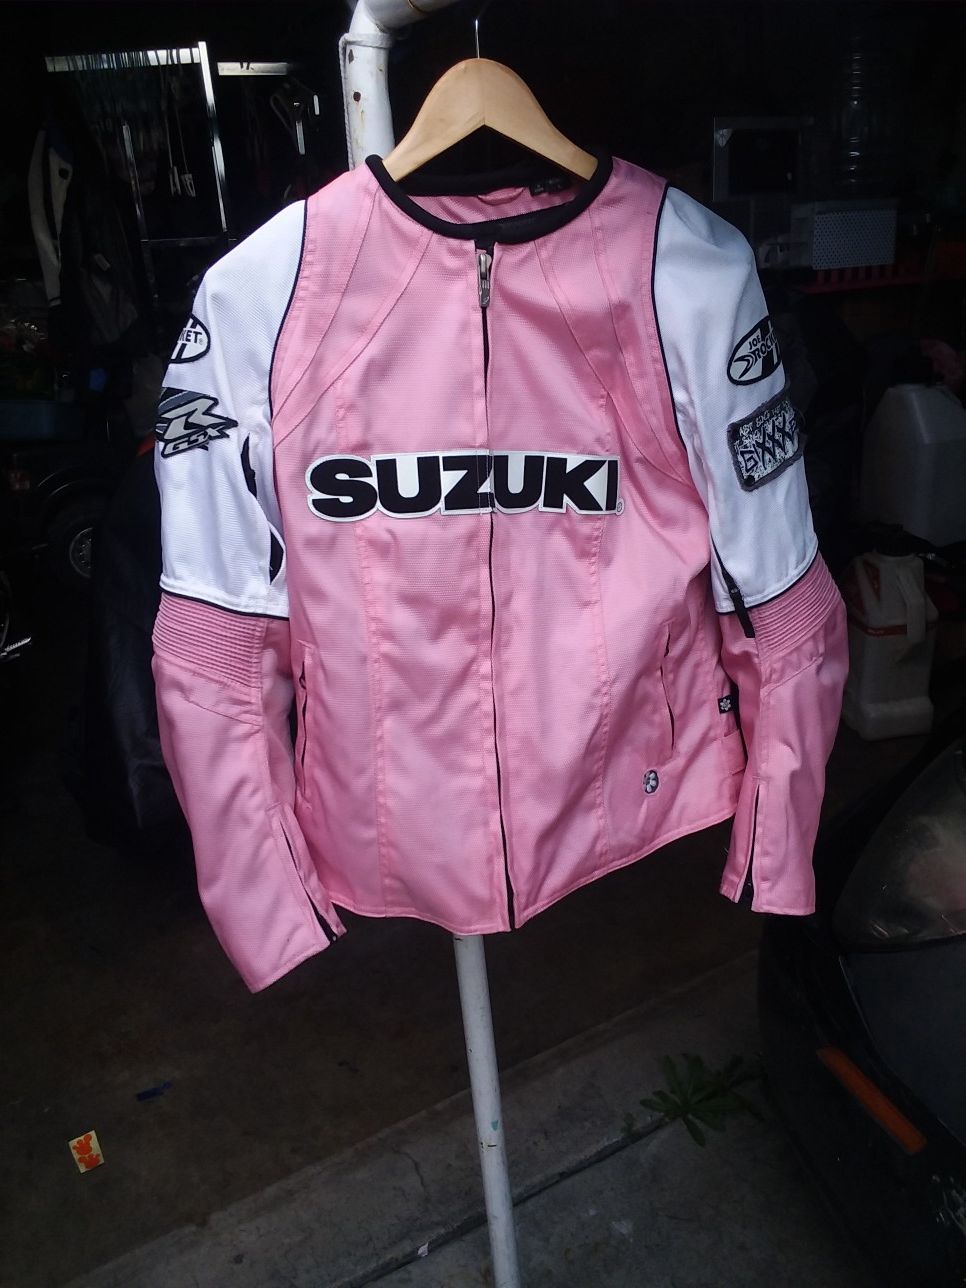 Women's original Suzuki motorcycle jacket size large $35